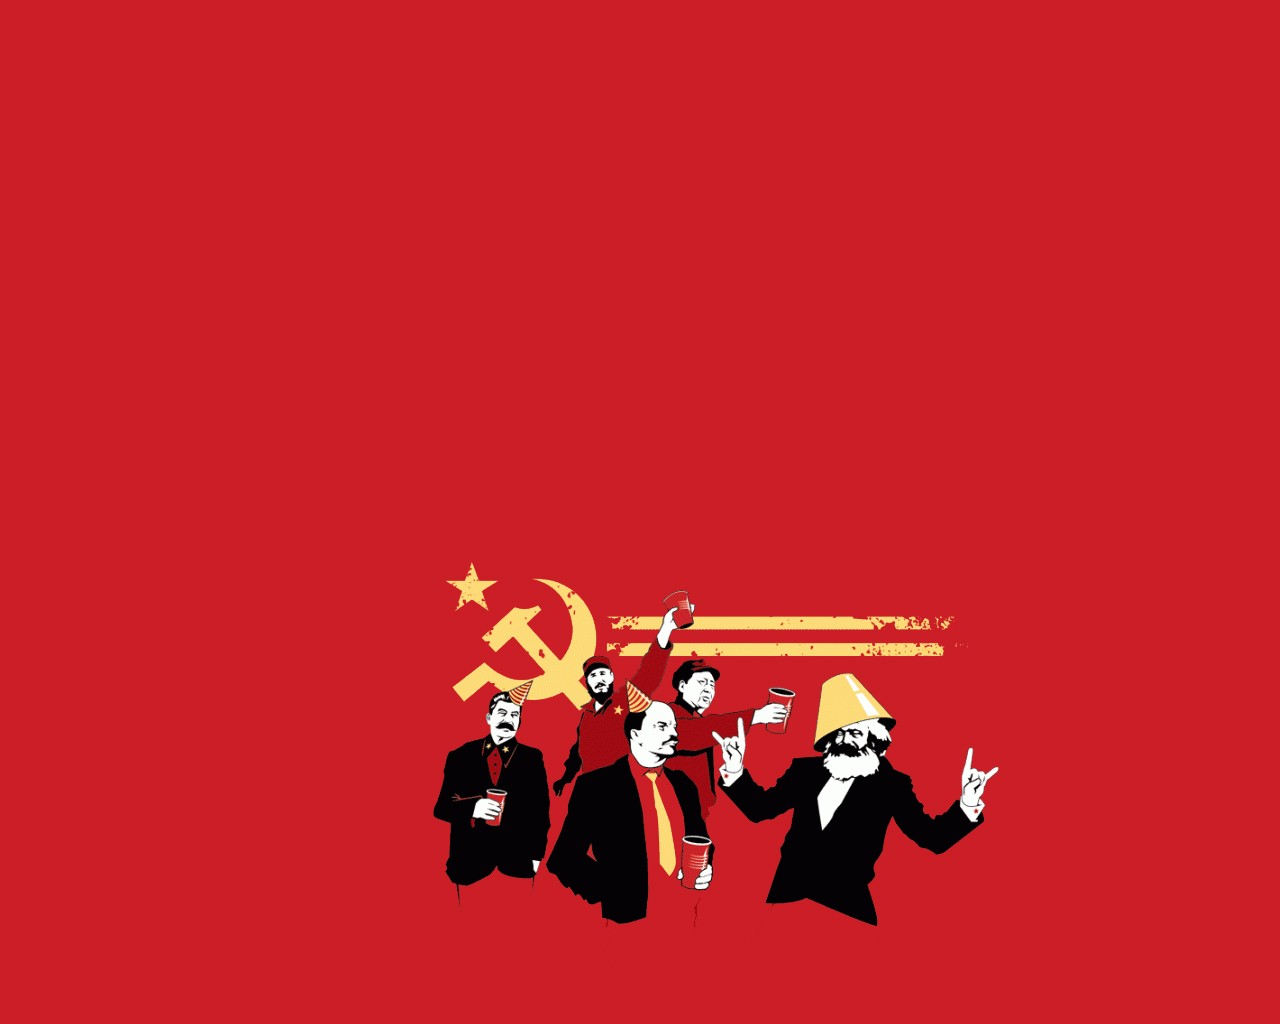 General 1280x1024 minimalism communism hammer and sickle Karl Marx Vladimir Lenin Joseph Stalin Mao Zedong Fidel Castro festivals red background history humor